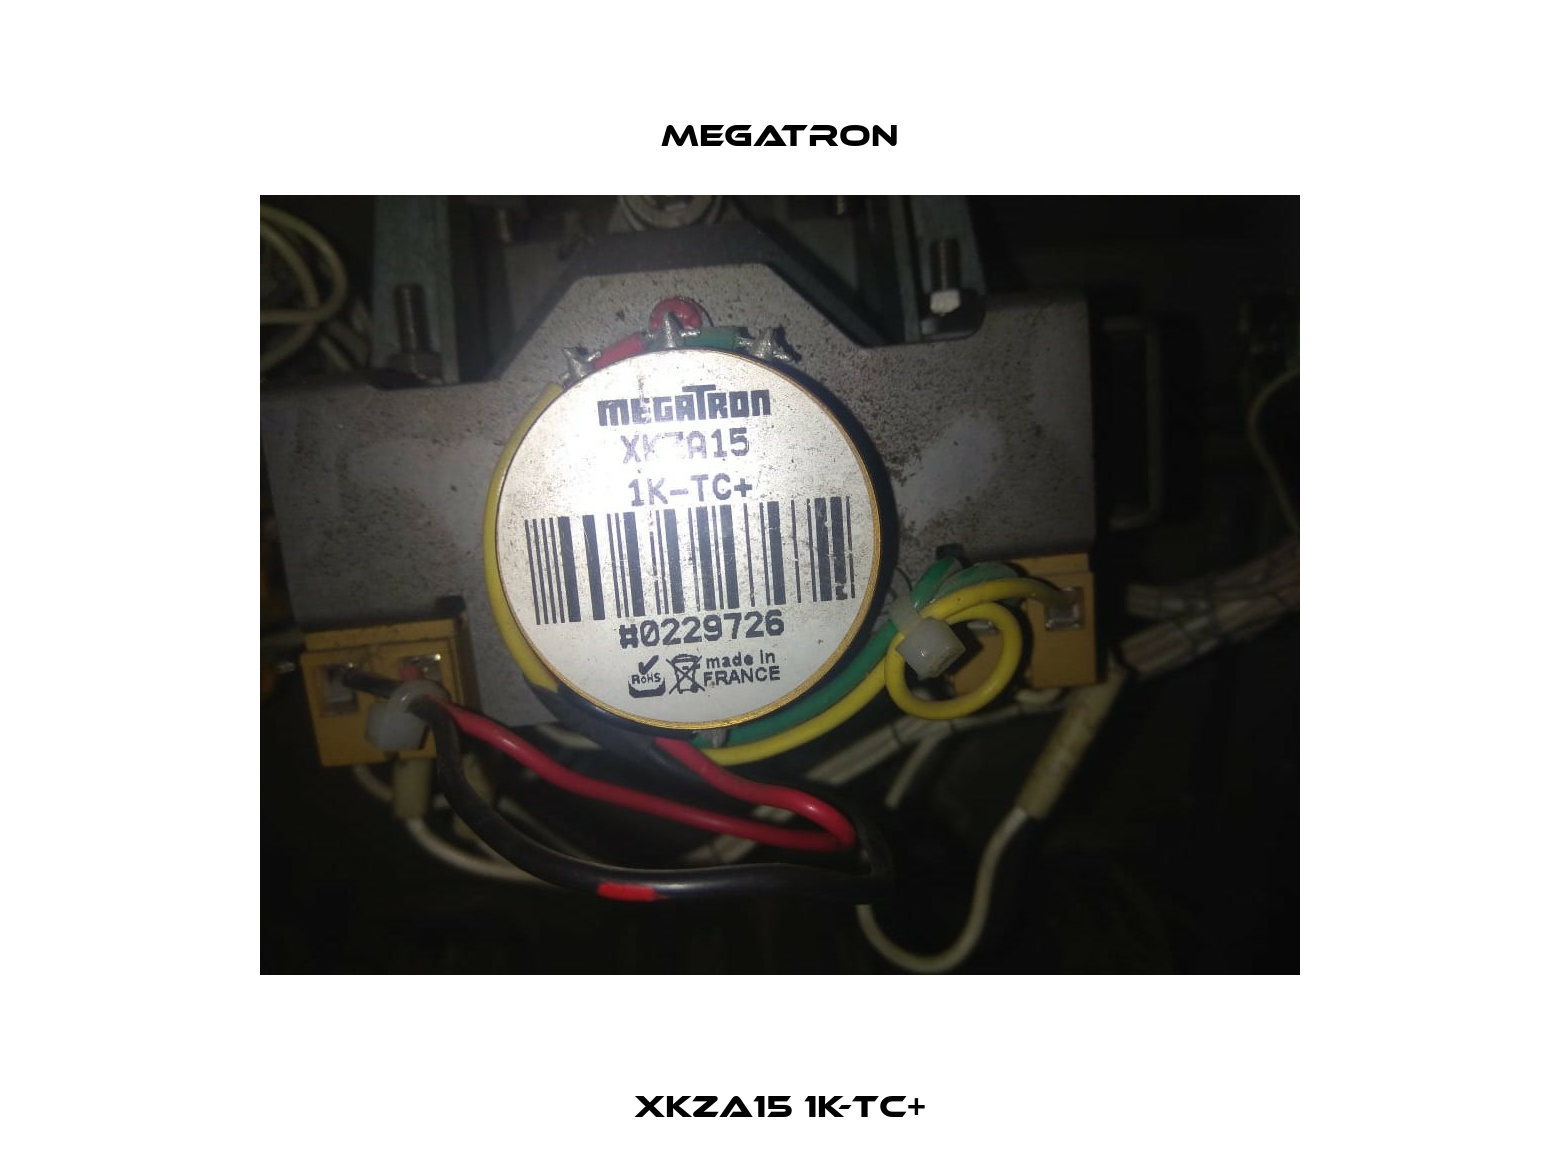 XKZA15 1K-TC+ Megatron